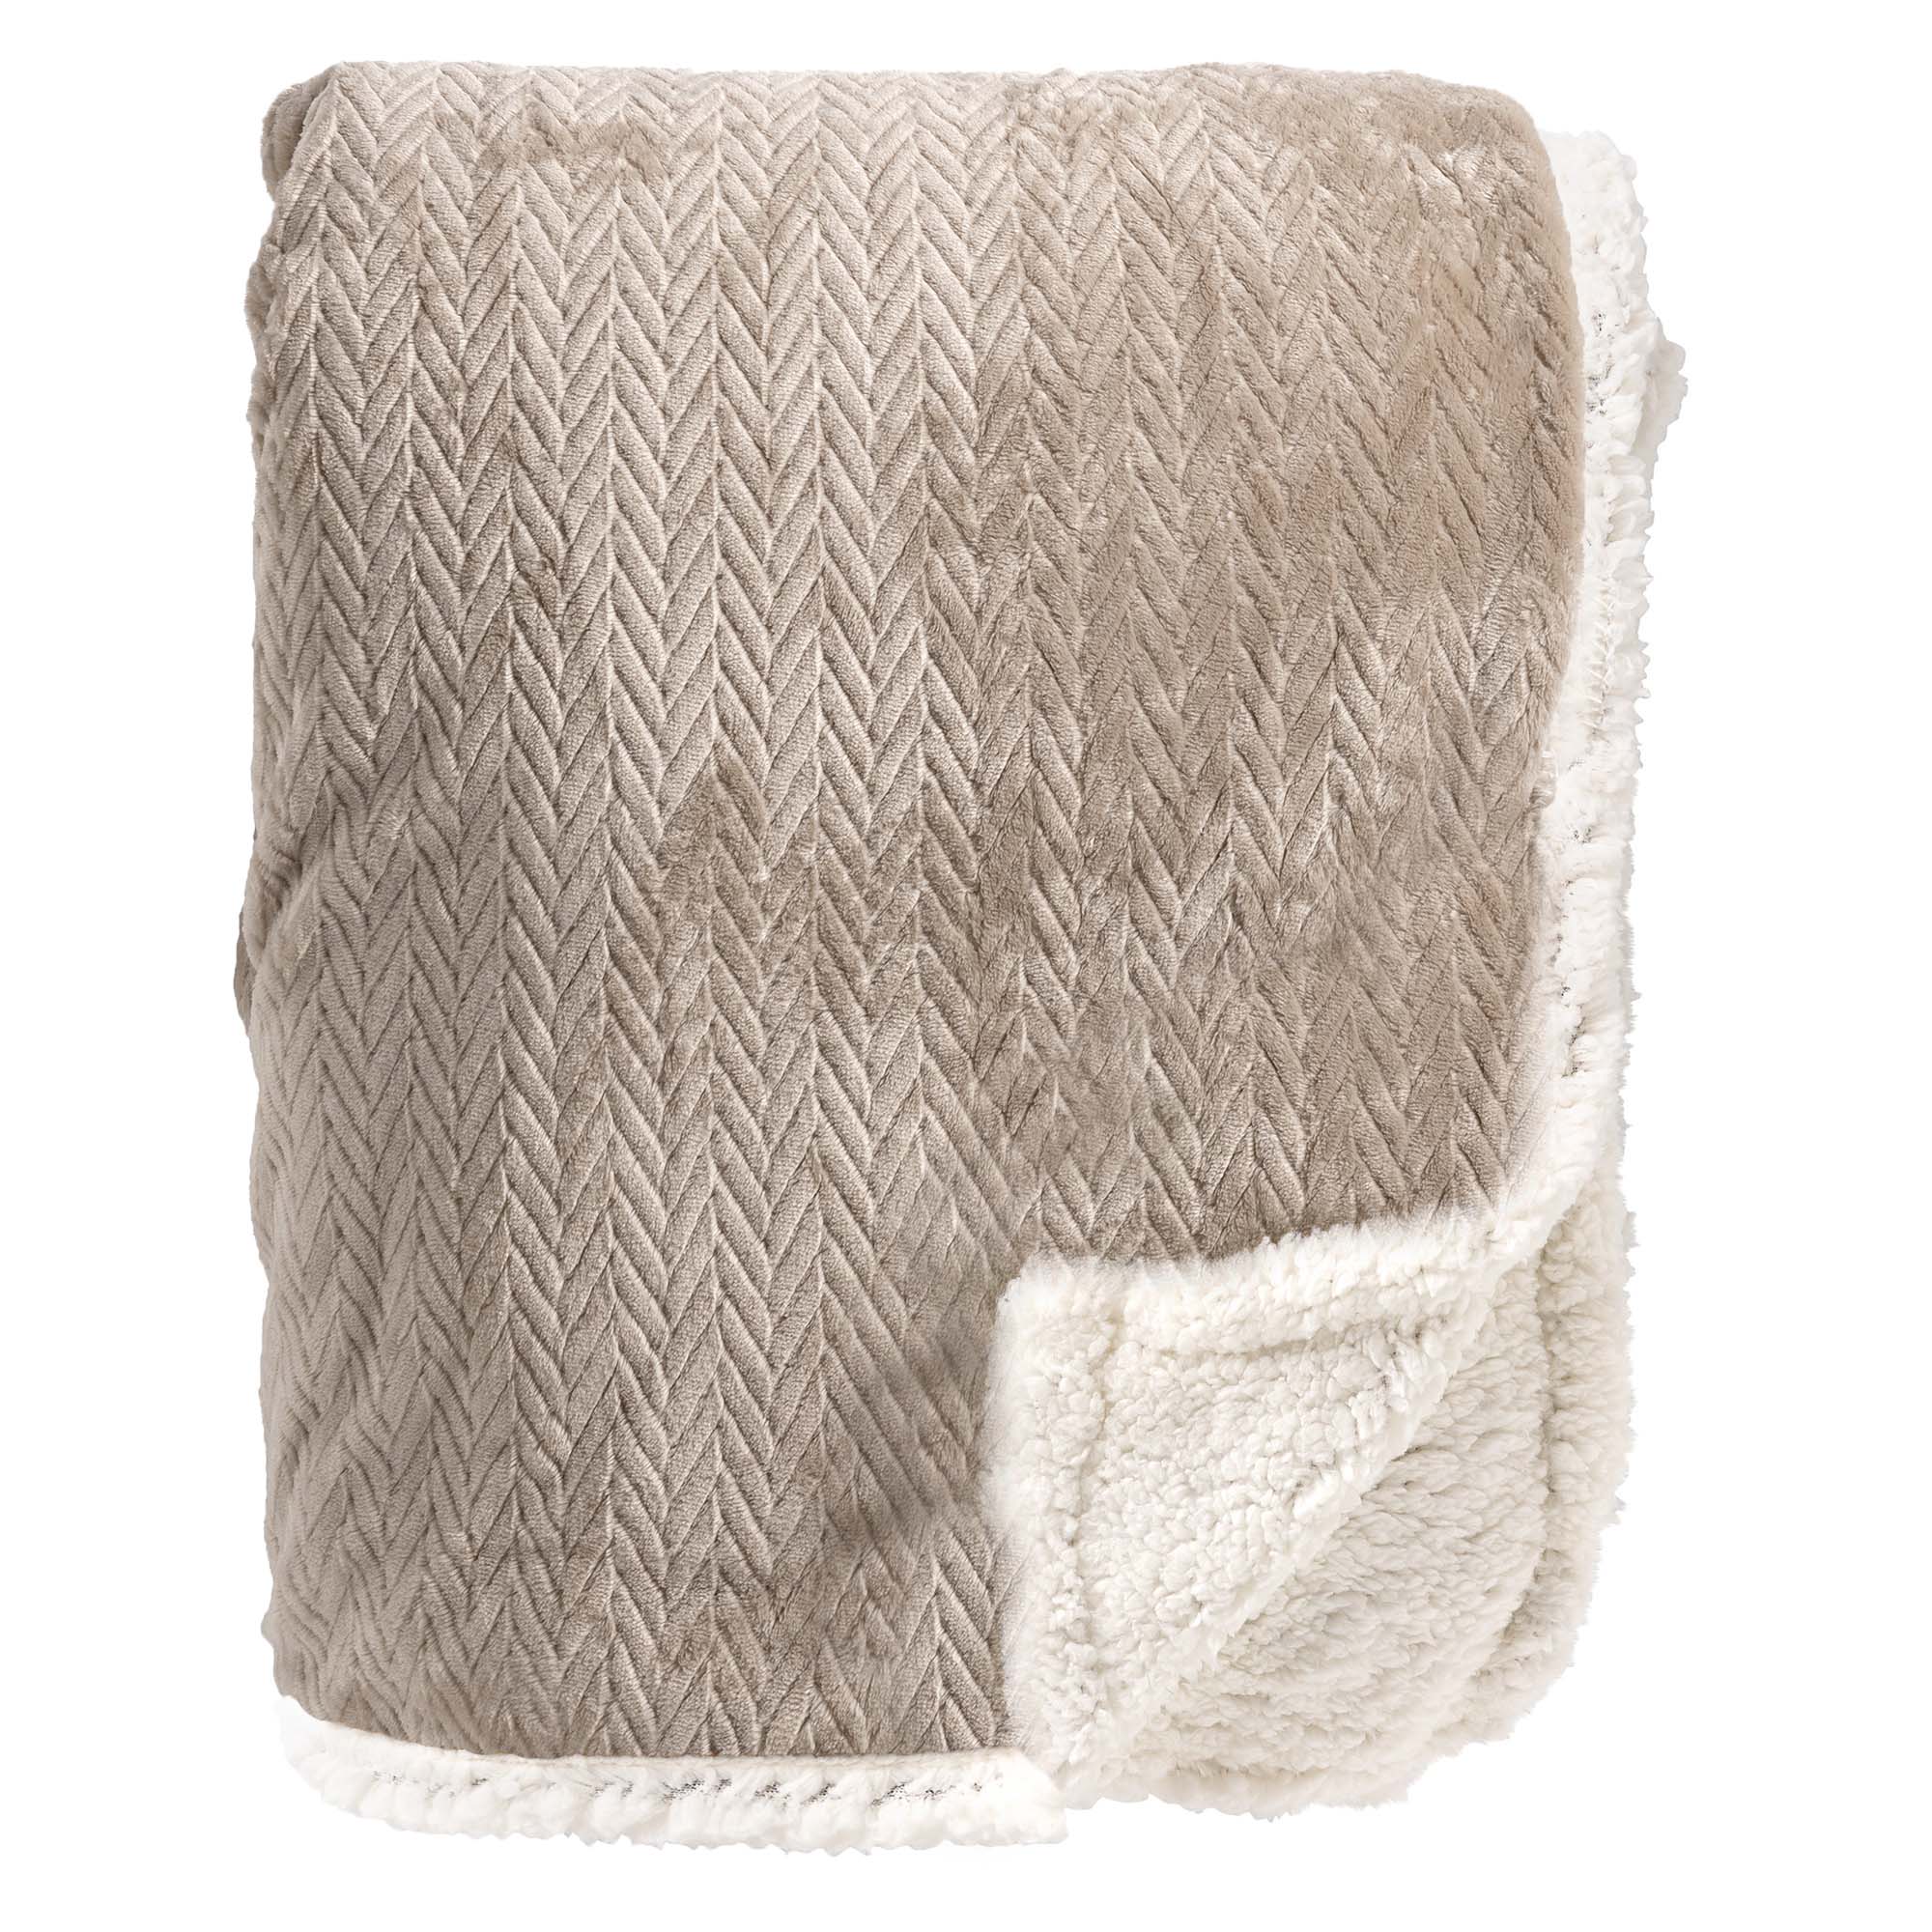 BOBBY - Plaid 150x200 cm - fleece deken met teddy - Pumice Stone - beige 